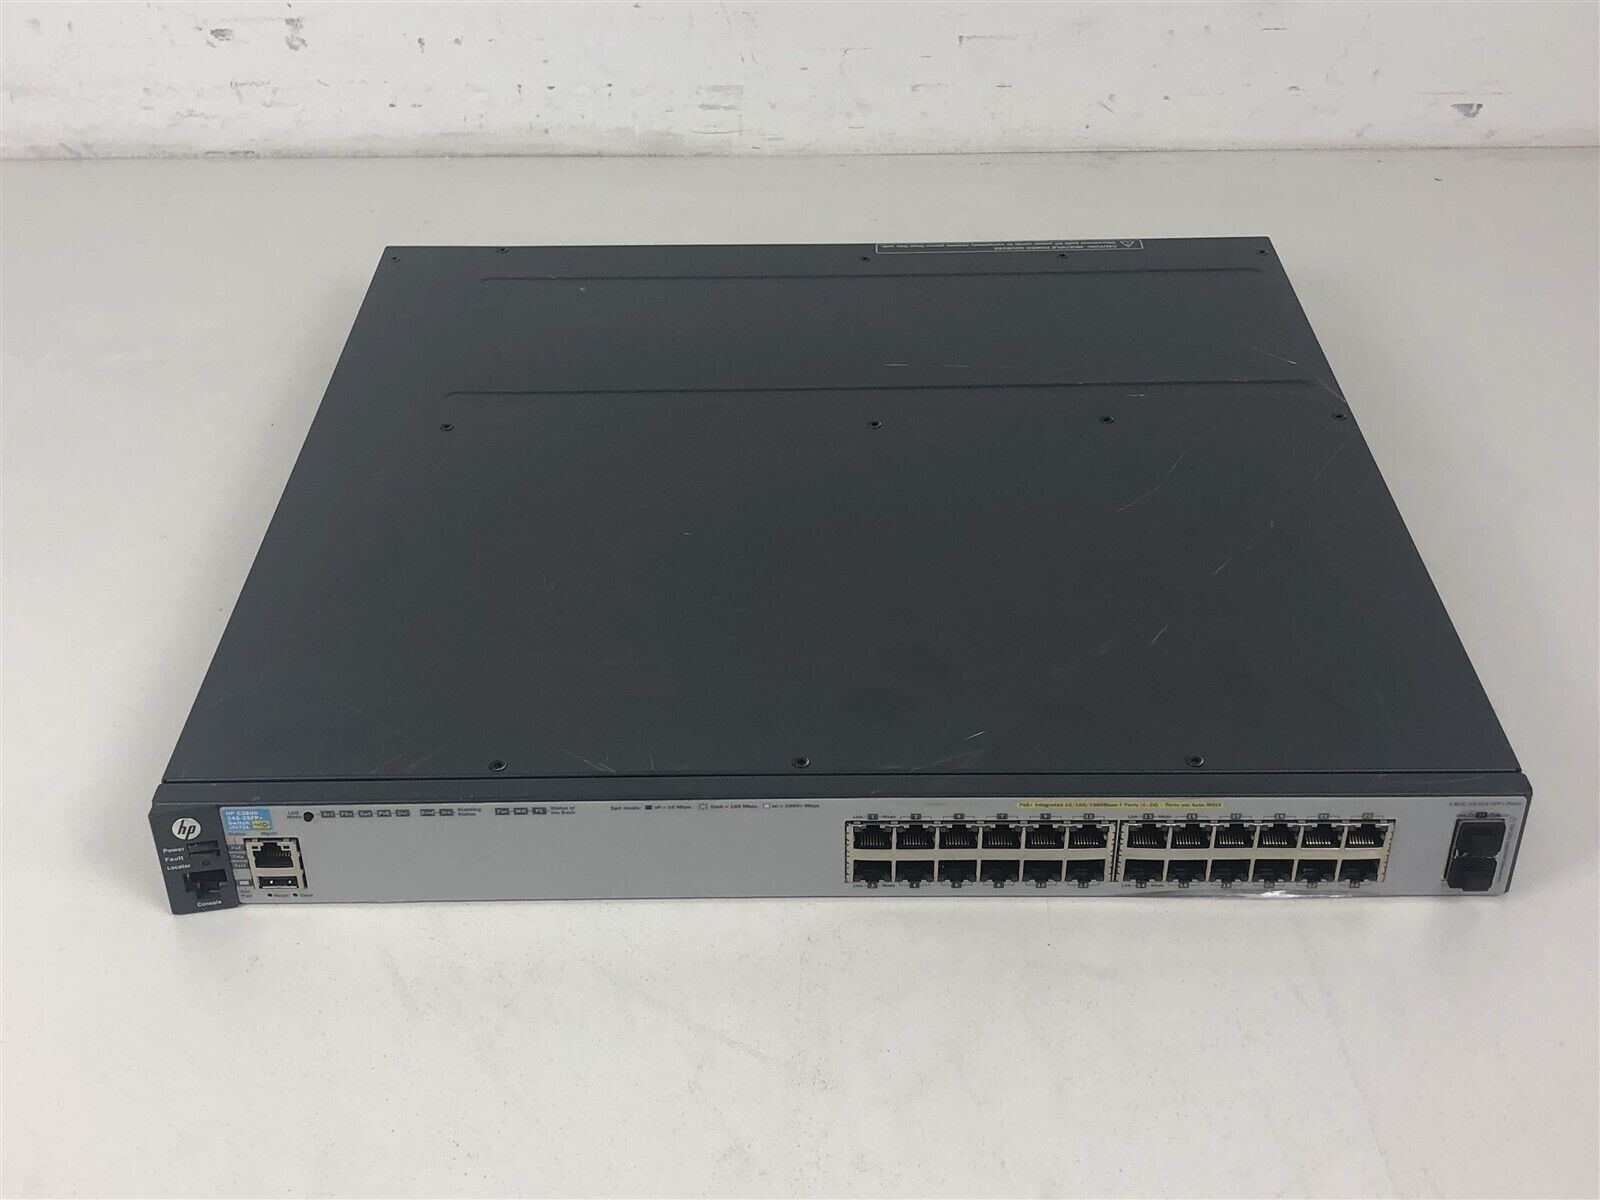 HP E3800 24G-PoE+-2SFP+ 24-Port Ethernet Switch (J9573A)